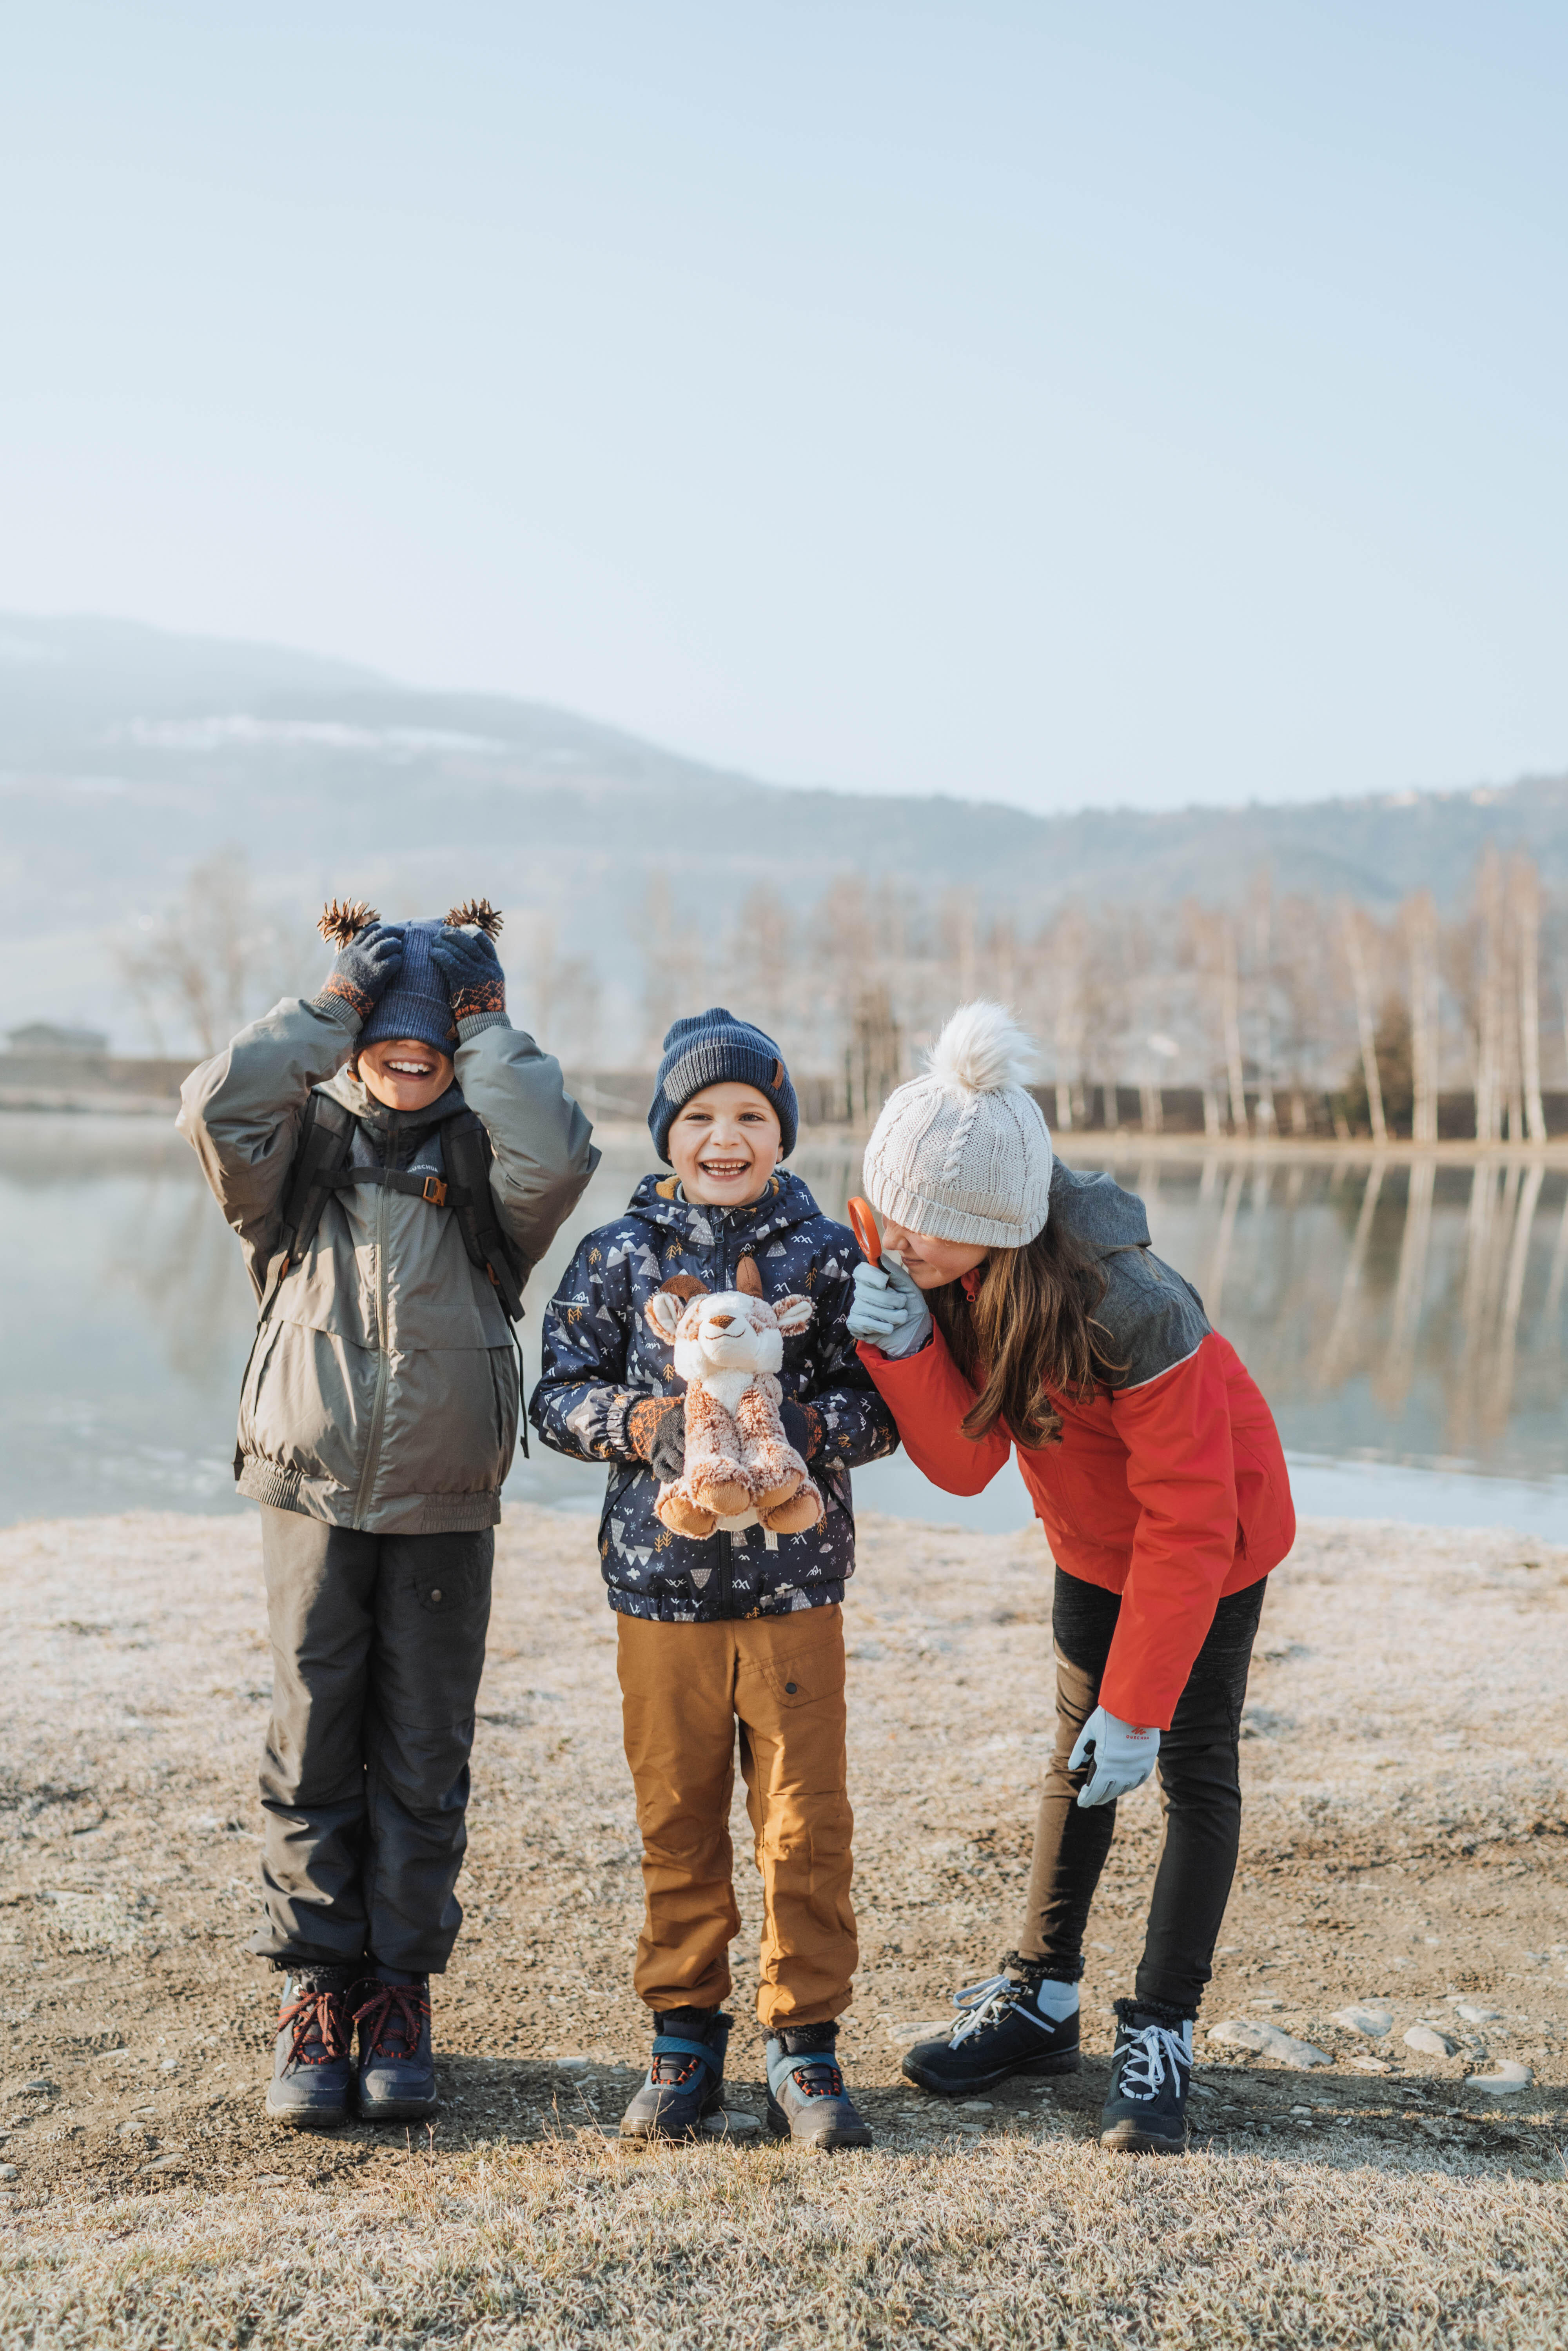 Kids’ Waterproof Winter Jacket - SH 100 Pink - QUECHUA